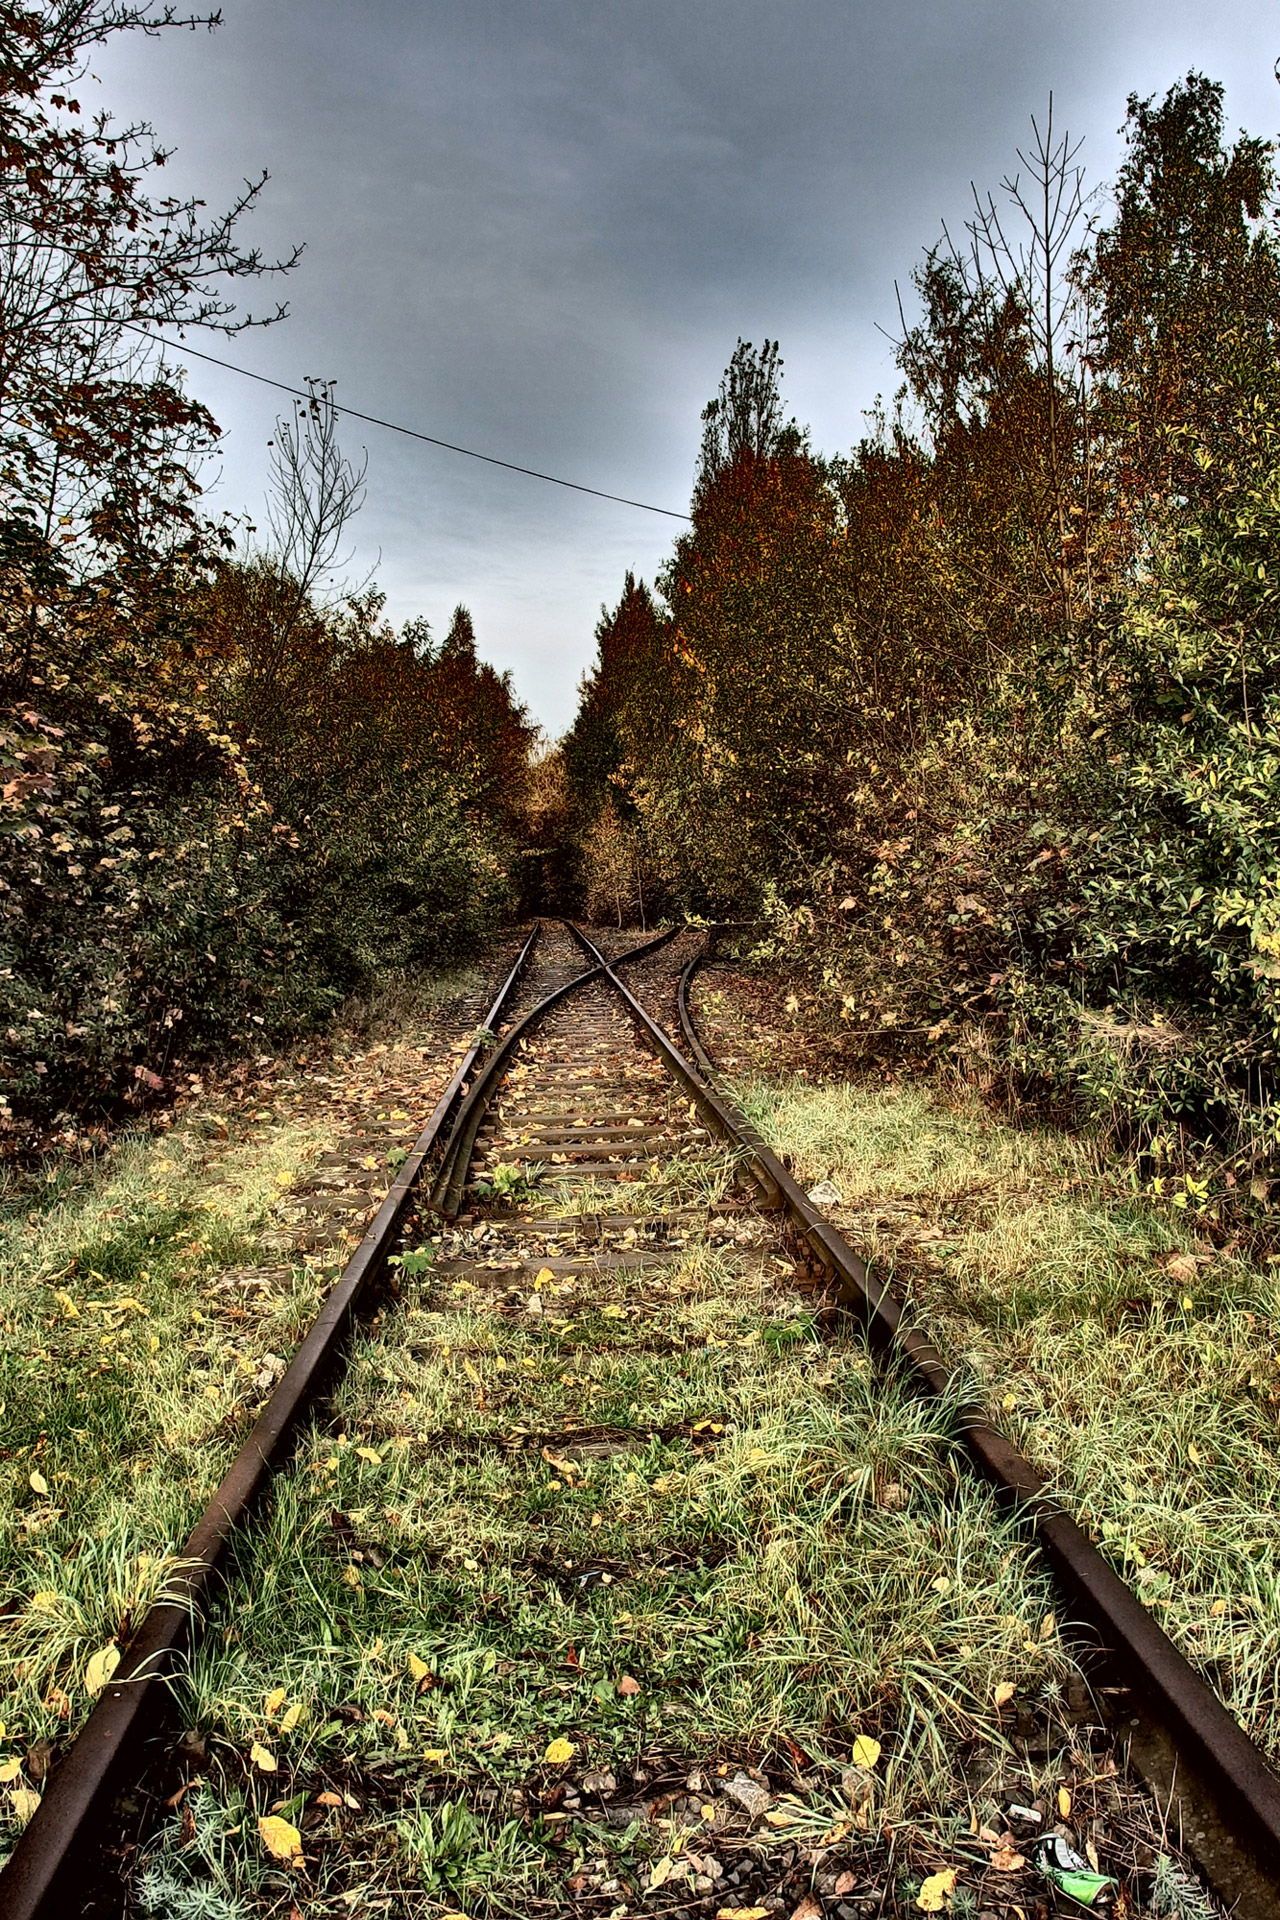 Free Image: Old Train Tracks | Libreshot Public Domain Photos